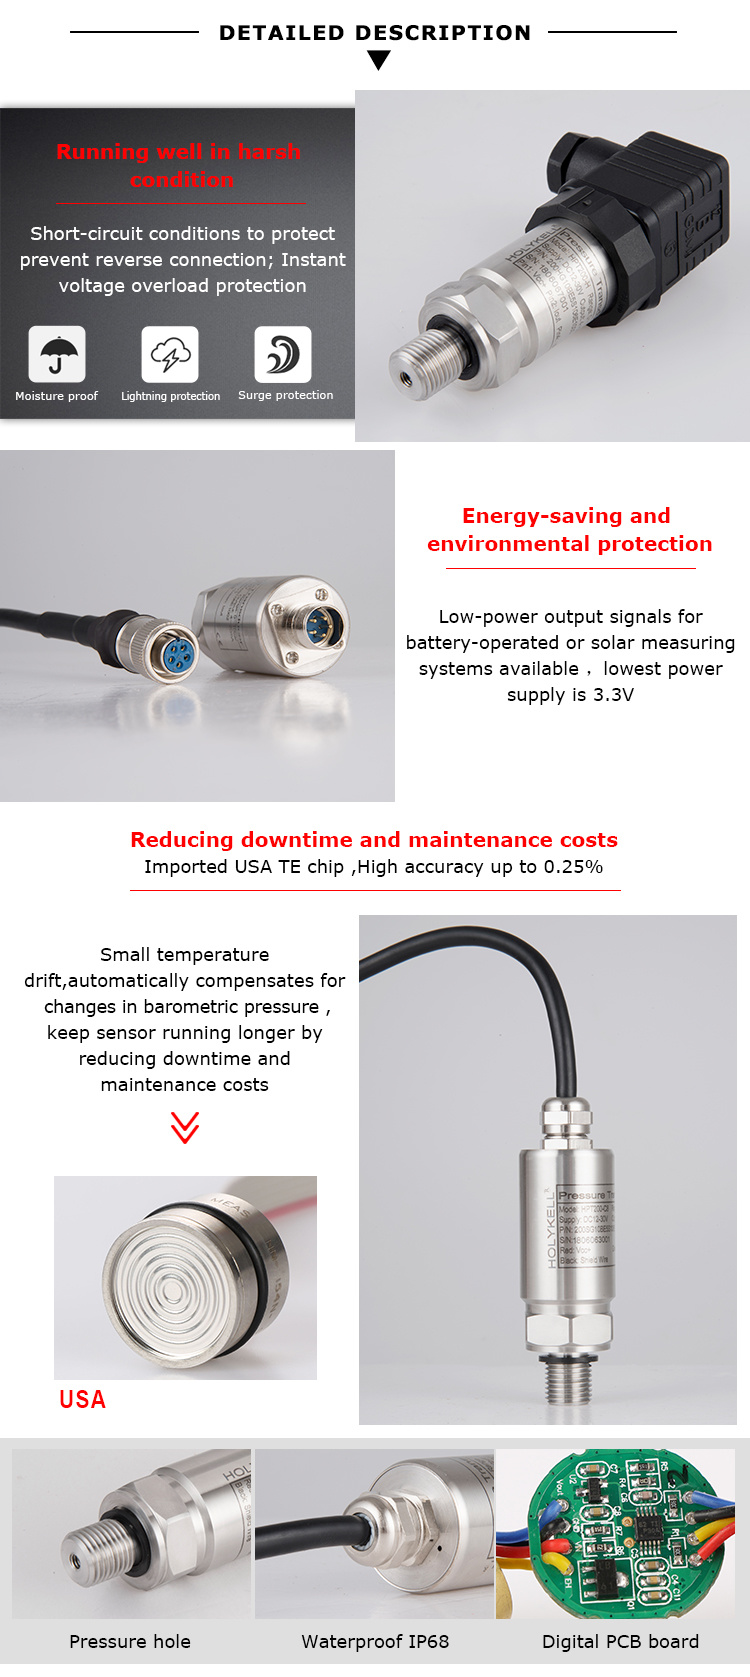 Hpt200 4-20mA Output 40 Bar Standard Low Cost Water Pipe Digital Pressure Sensor